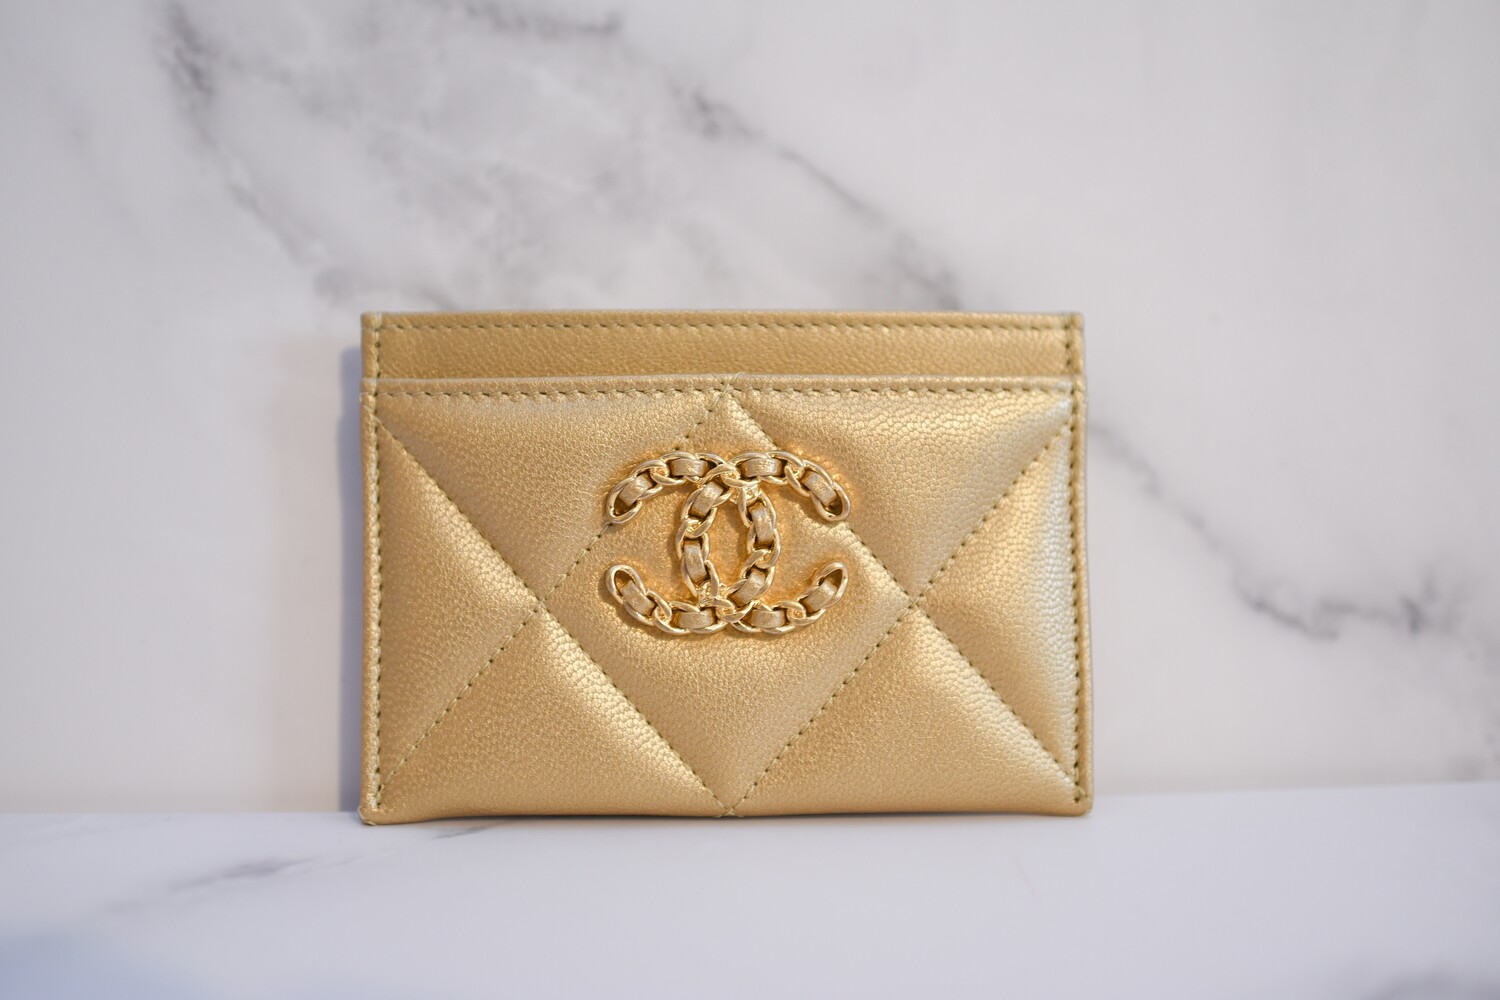 Chanel 19 SLG Flat Cardholder, Gold Lambskin Leather, Gold Hardware, New in Box GA001